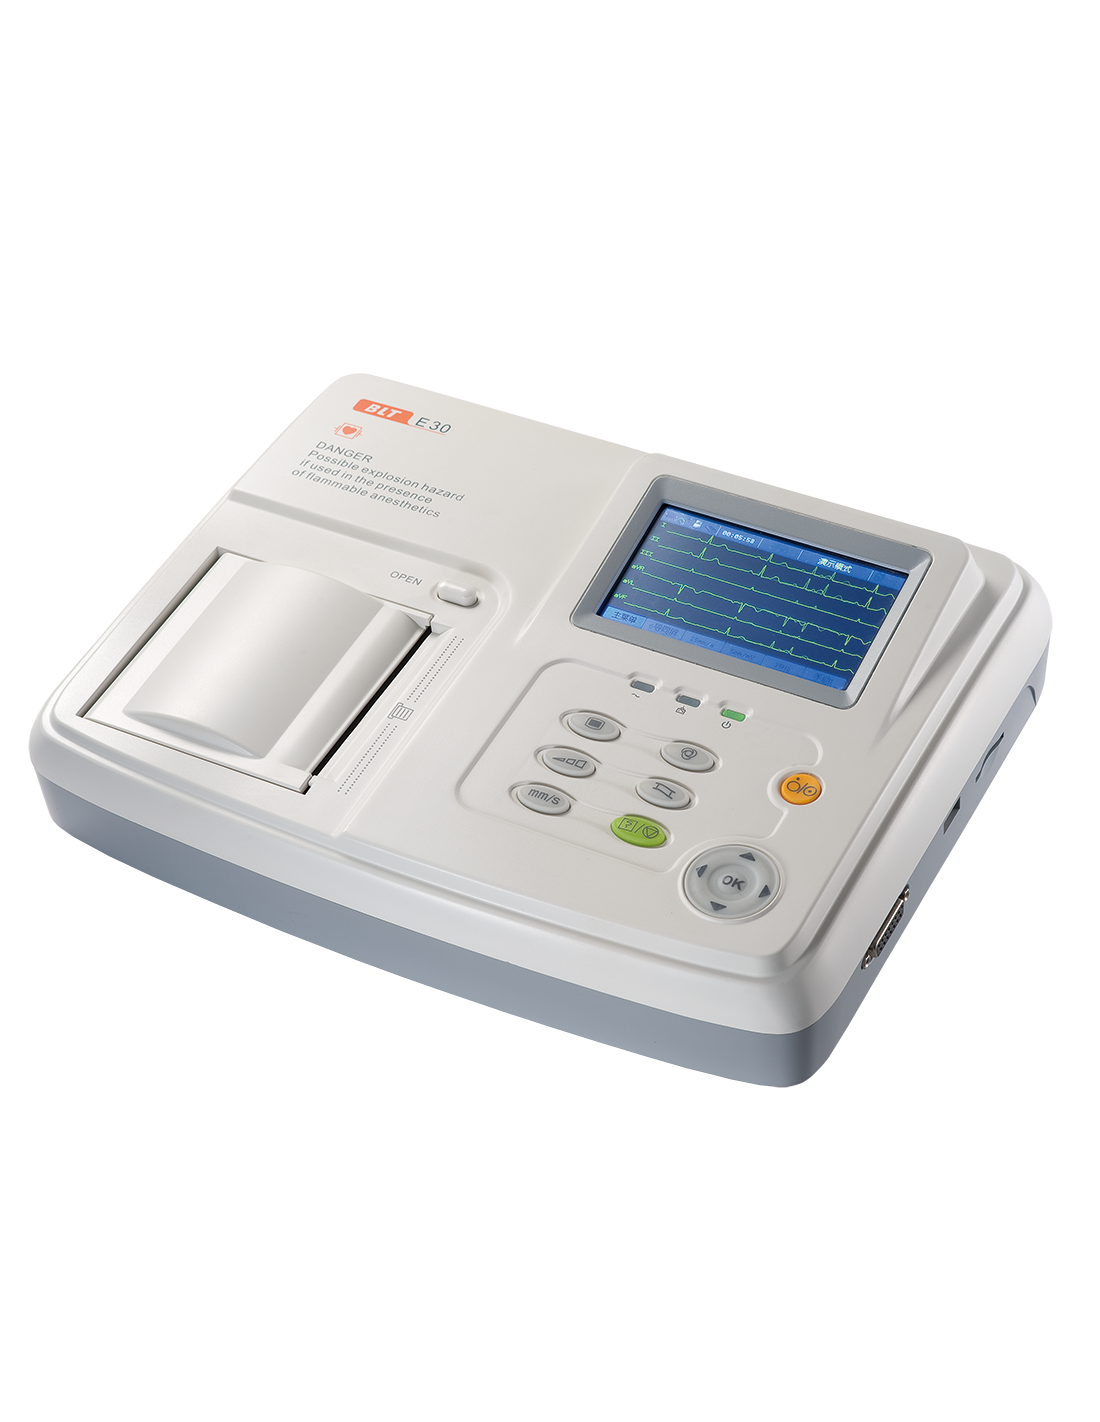 Electrocardiógrafo portátil digital C30+ de TEB